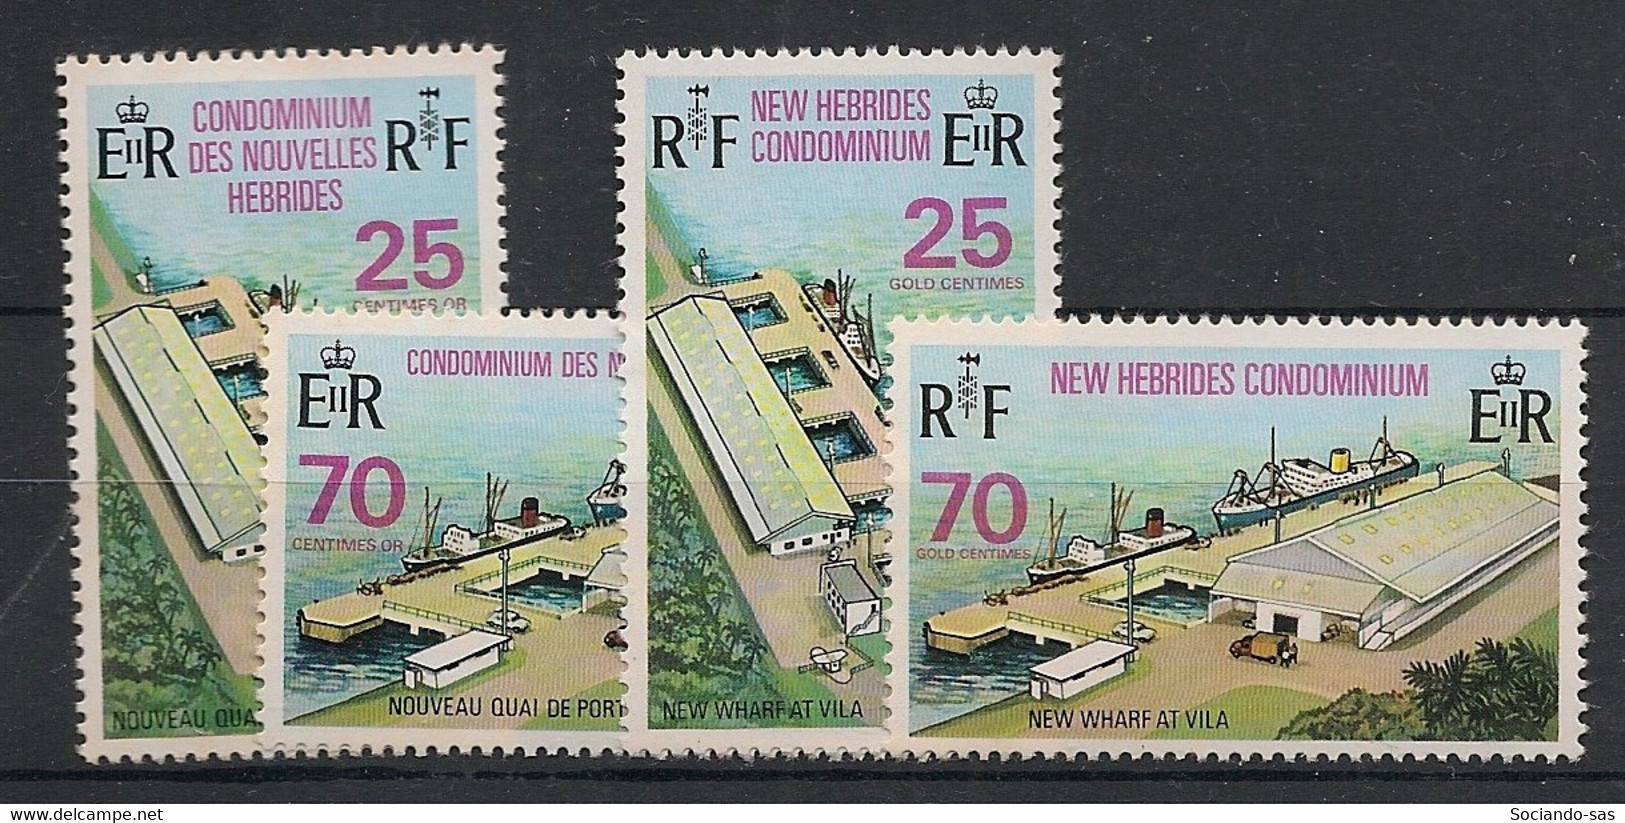 NOUVELLES HEBRIDES - 1973 - N°Yv. 366 à 369 - Série Complète - Neuf Luxe ** / MNH / Postfrisch - Unused Stamps